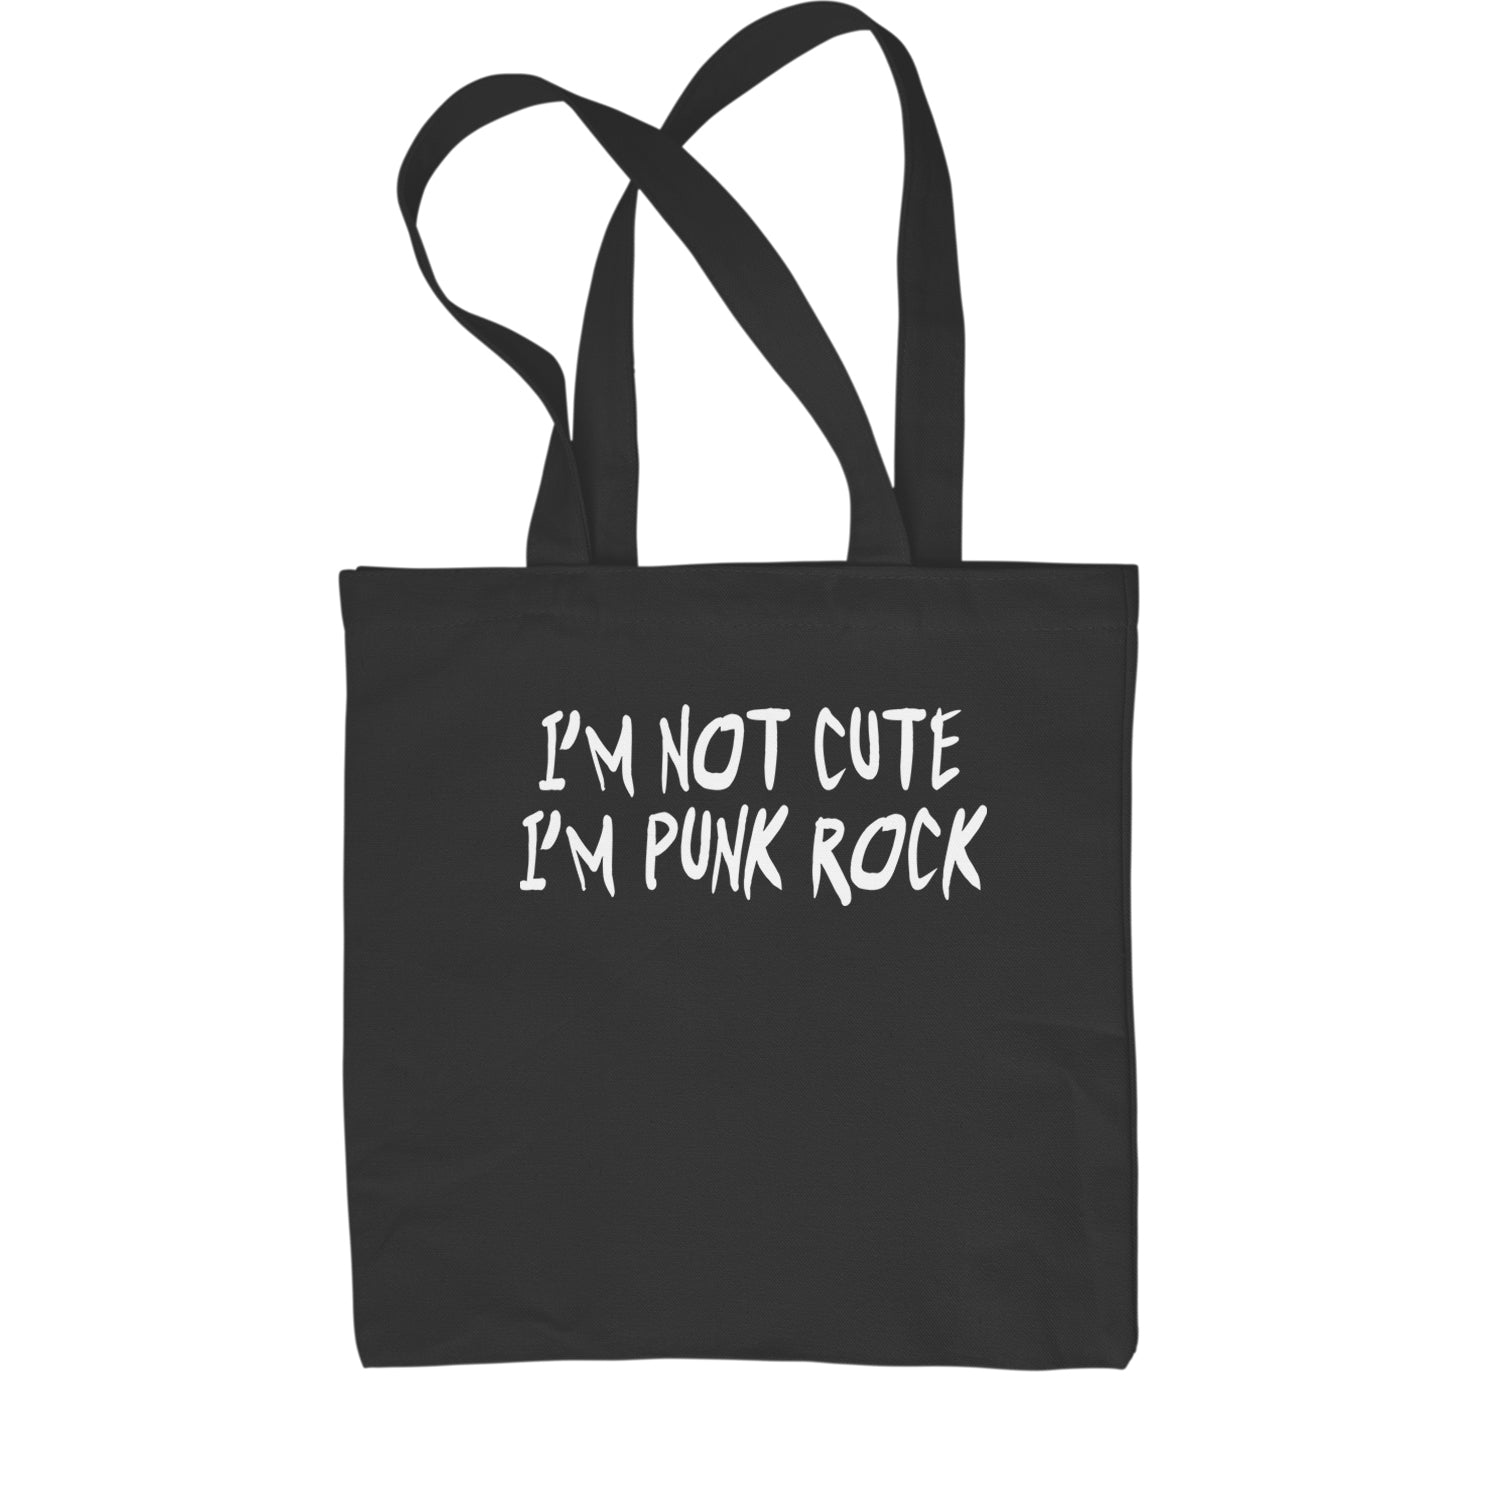 I'm Not Cute, I'm Punk Rock Shopping Tote Bag